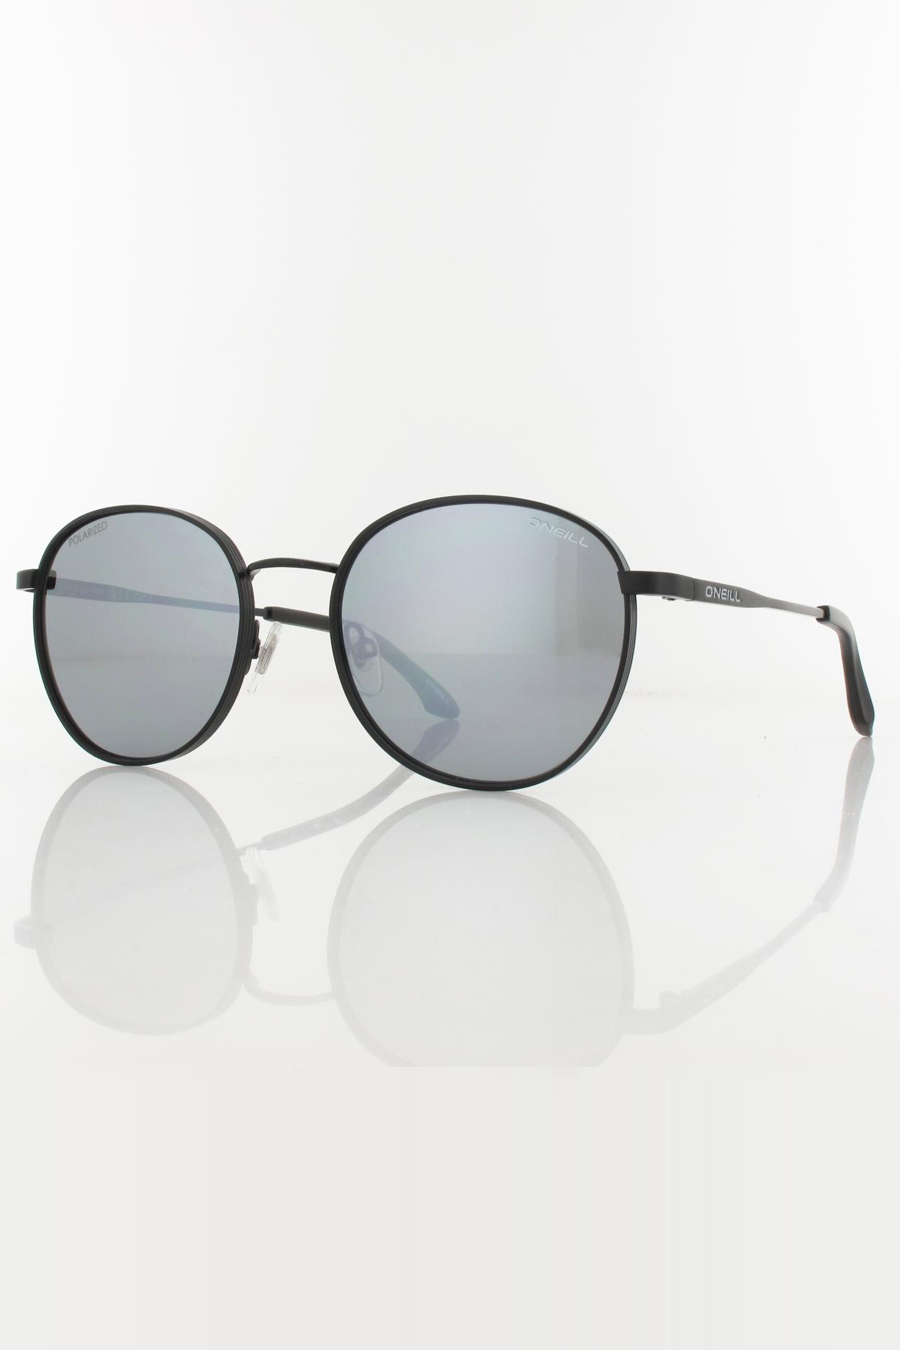 Sunglasses ONEILL ONS-9013-20-004P